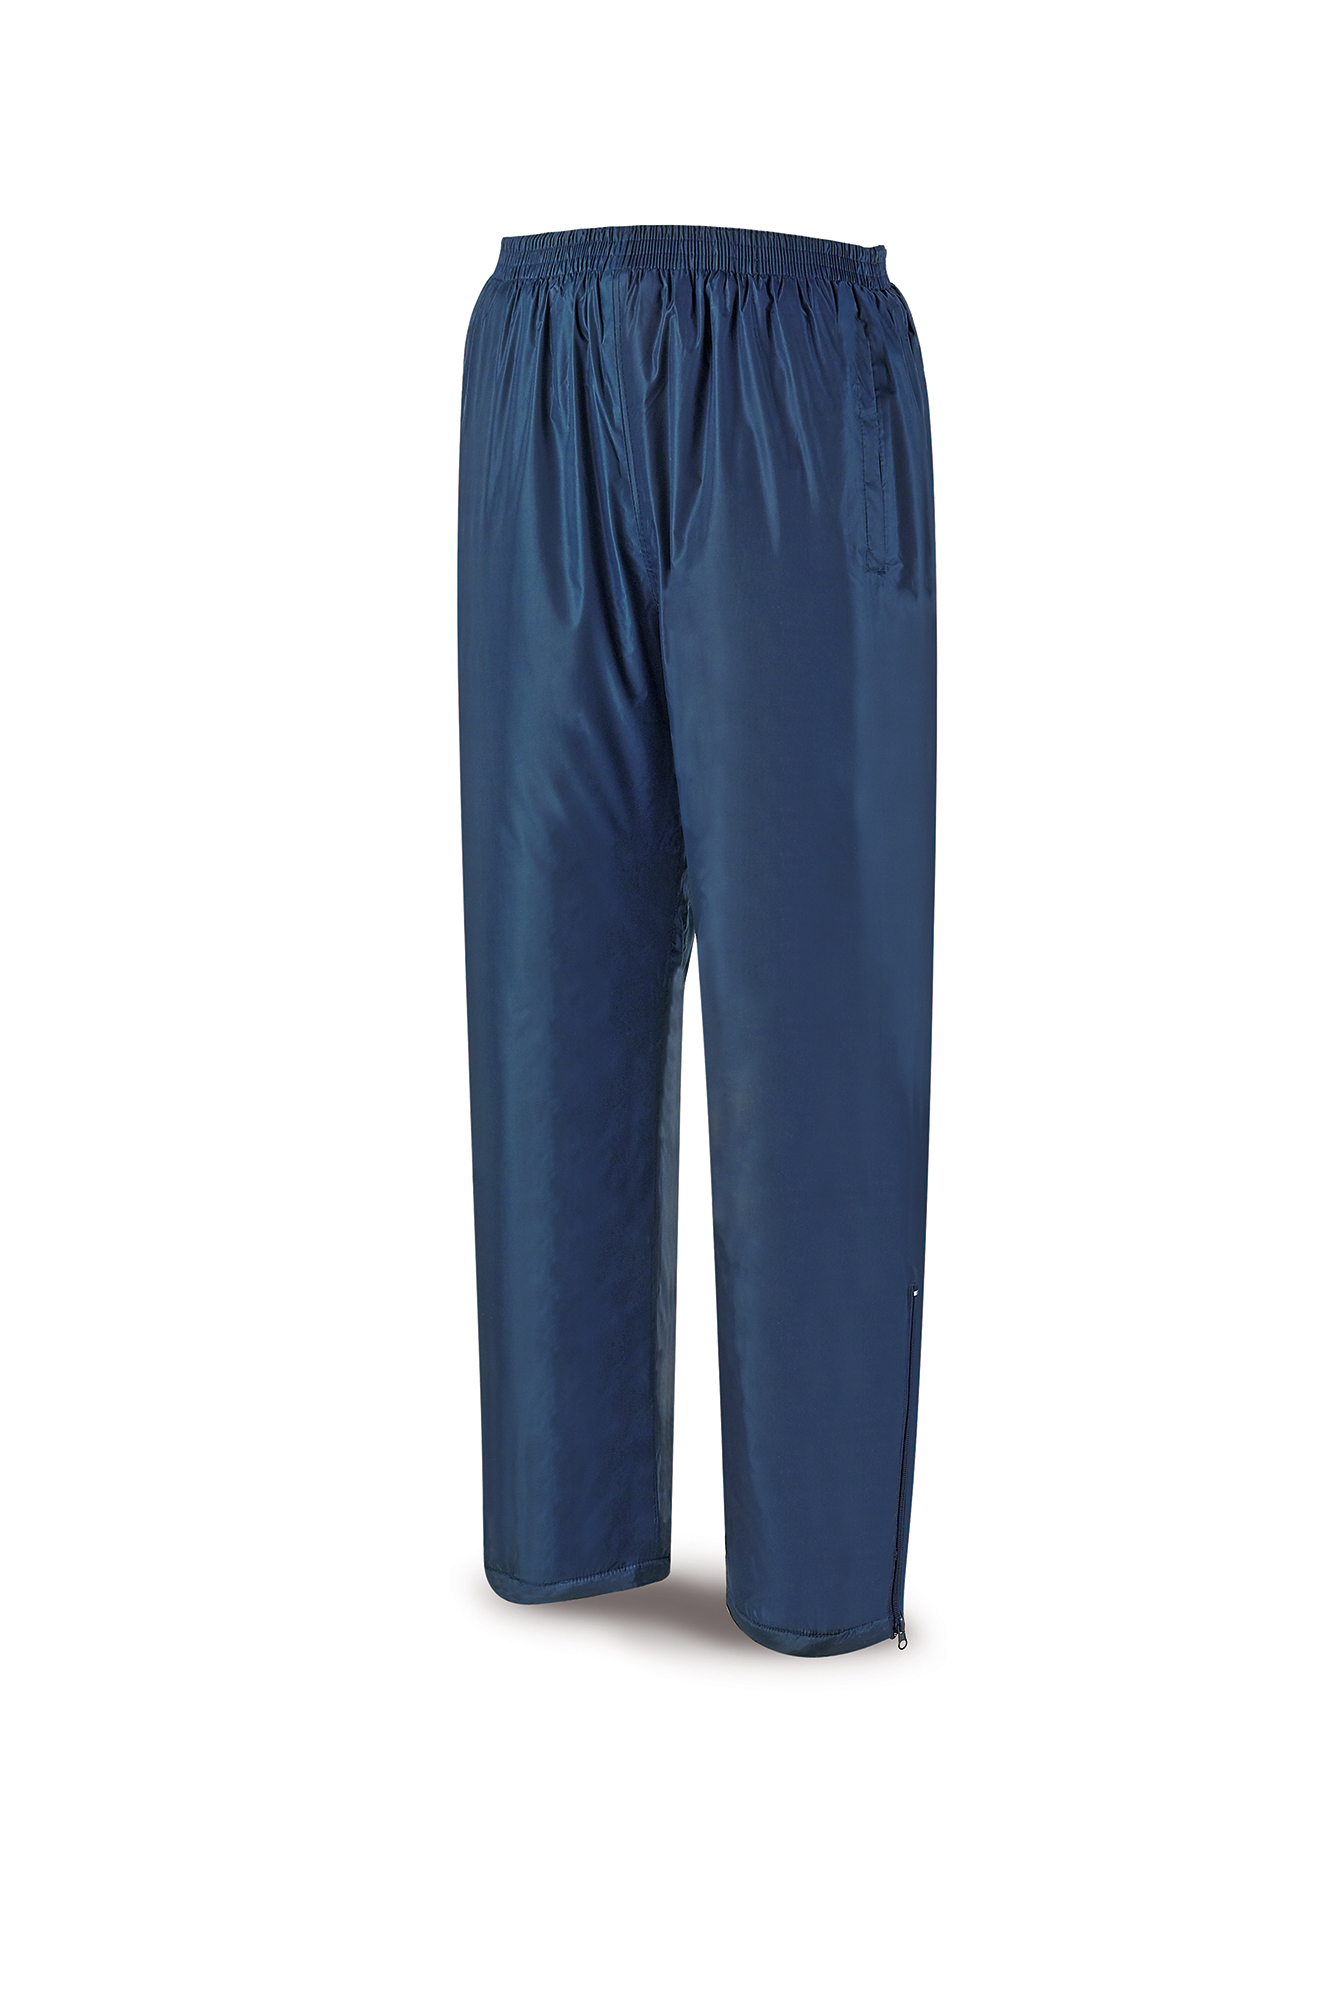 288-PANA Coats and Rain Gear Pants WINTER pants. Blue